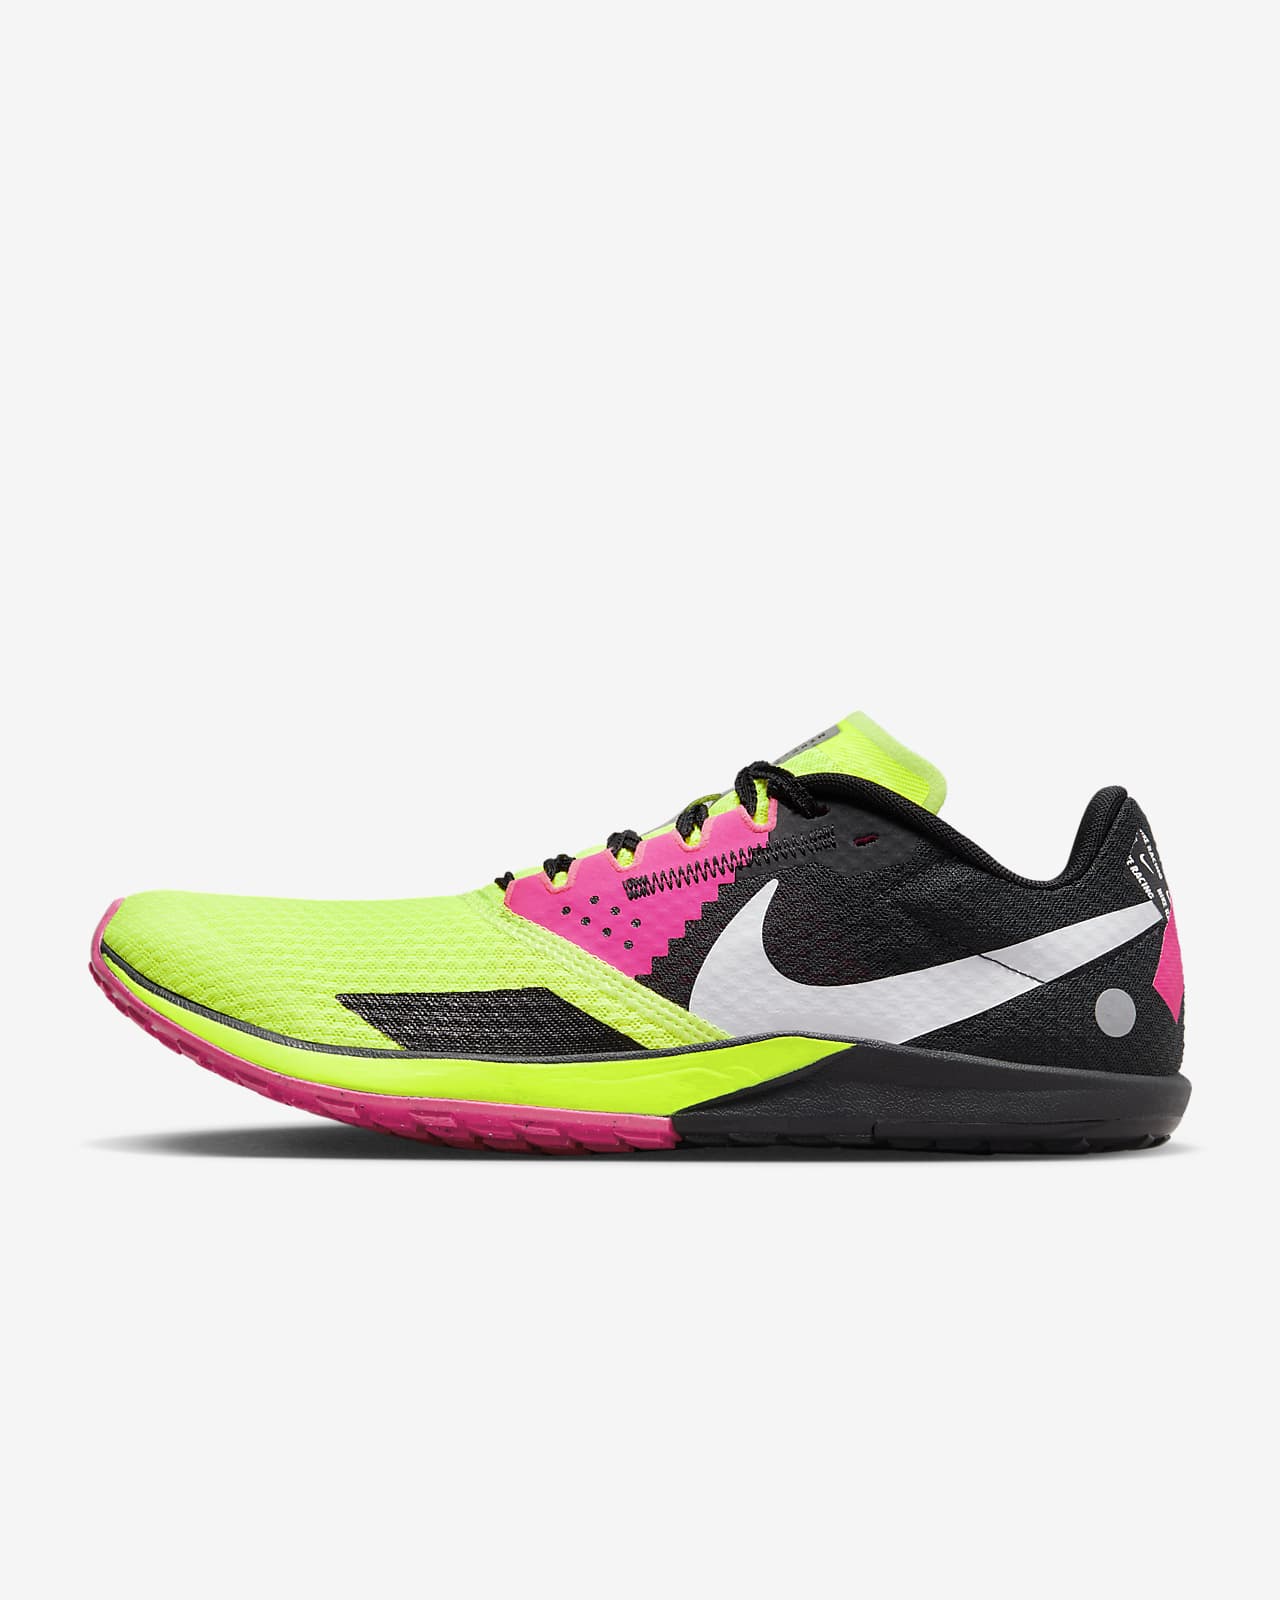 Calzado de atletismo para media distancia Nike Zoom Rival Waffle 6